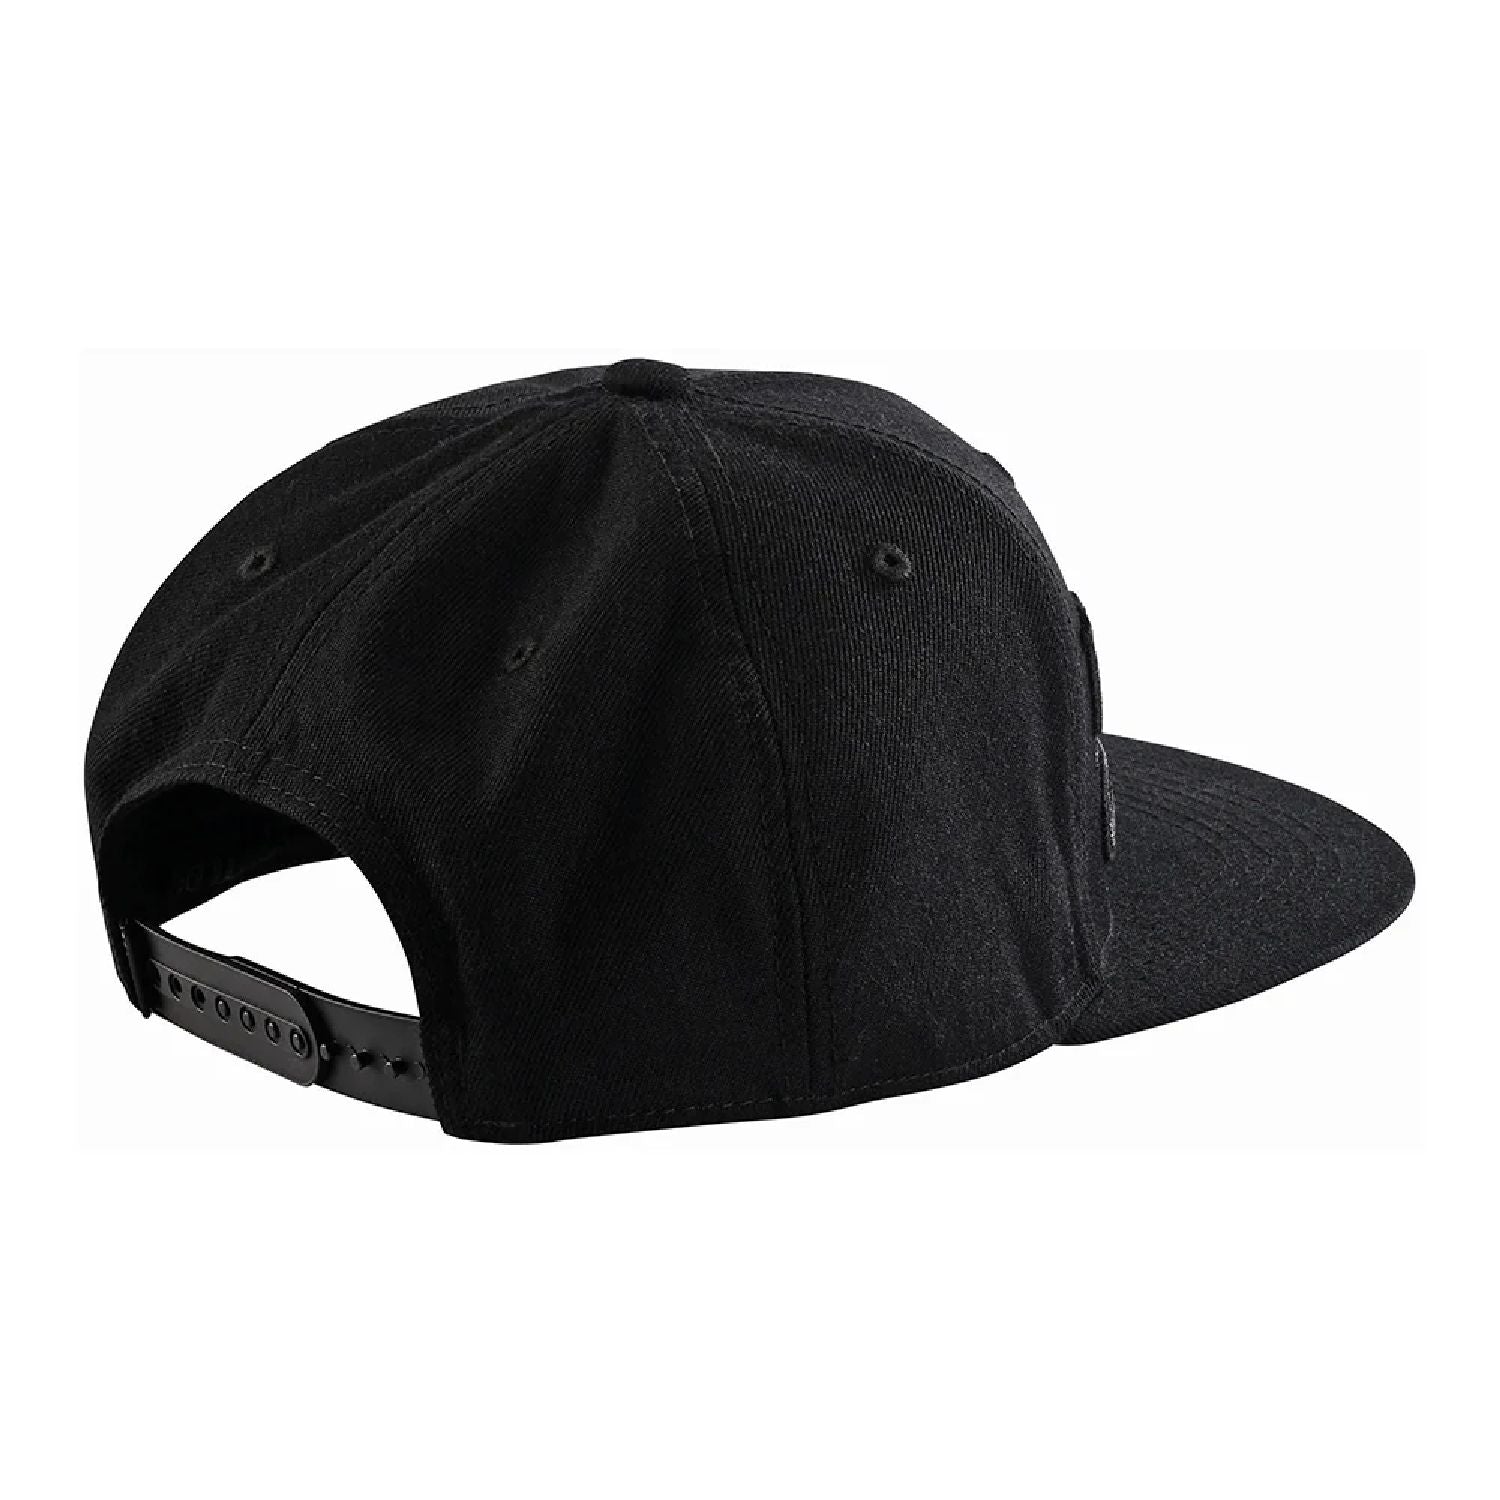 Troy Lee Designs Drop In Snapback Hat Black Reflective - Troy Lee Designs Hats